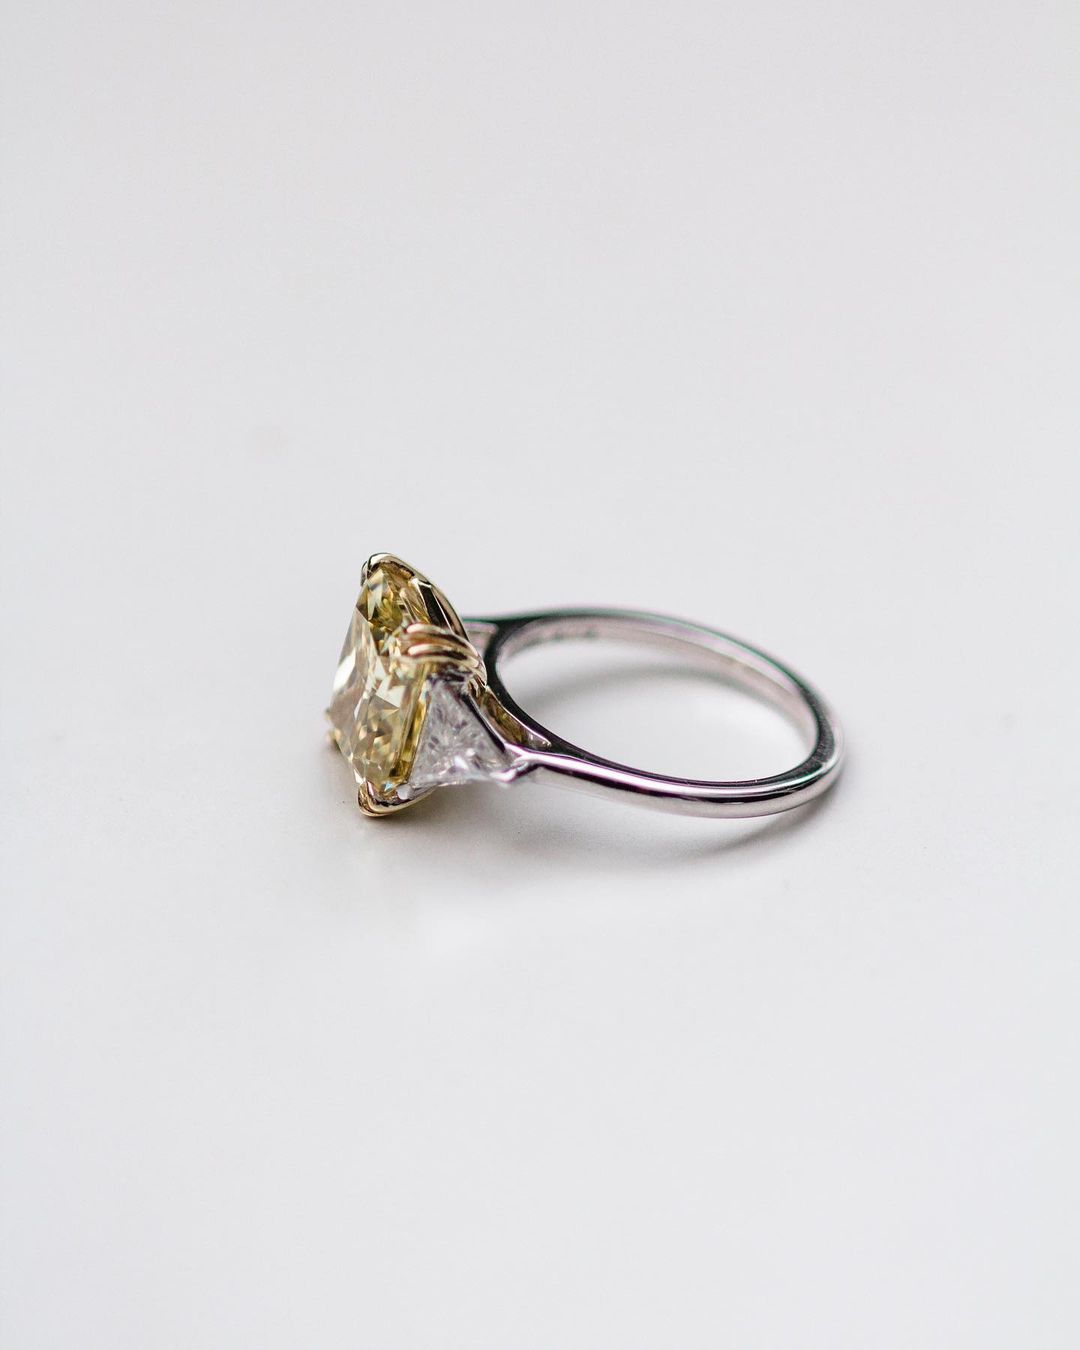 Canary Diamond Ring 4.9 carat HUGE 10.5x9mm Yellow Cusion Radiant, Radiant cut diamond ring